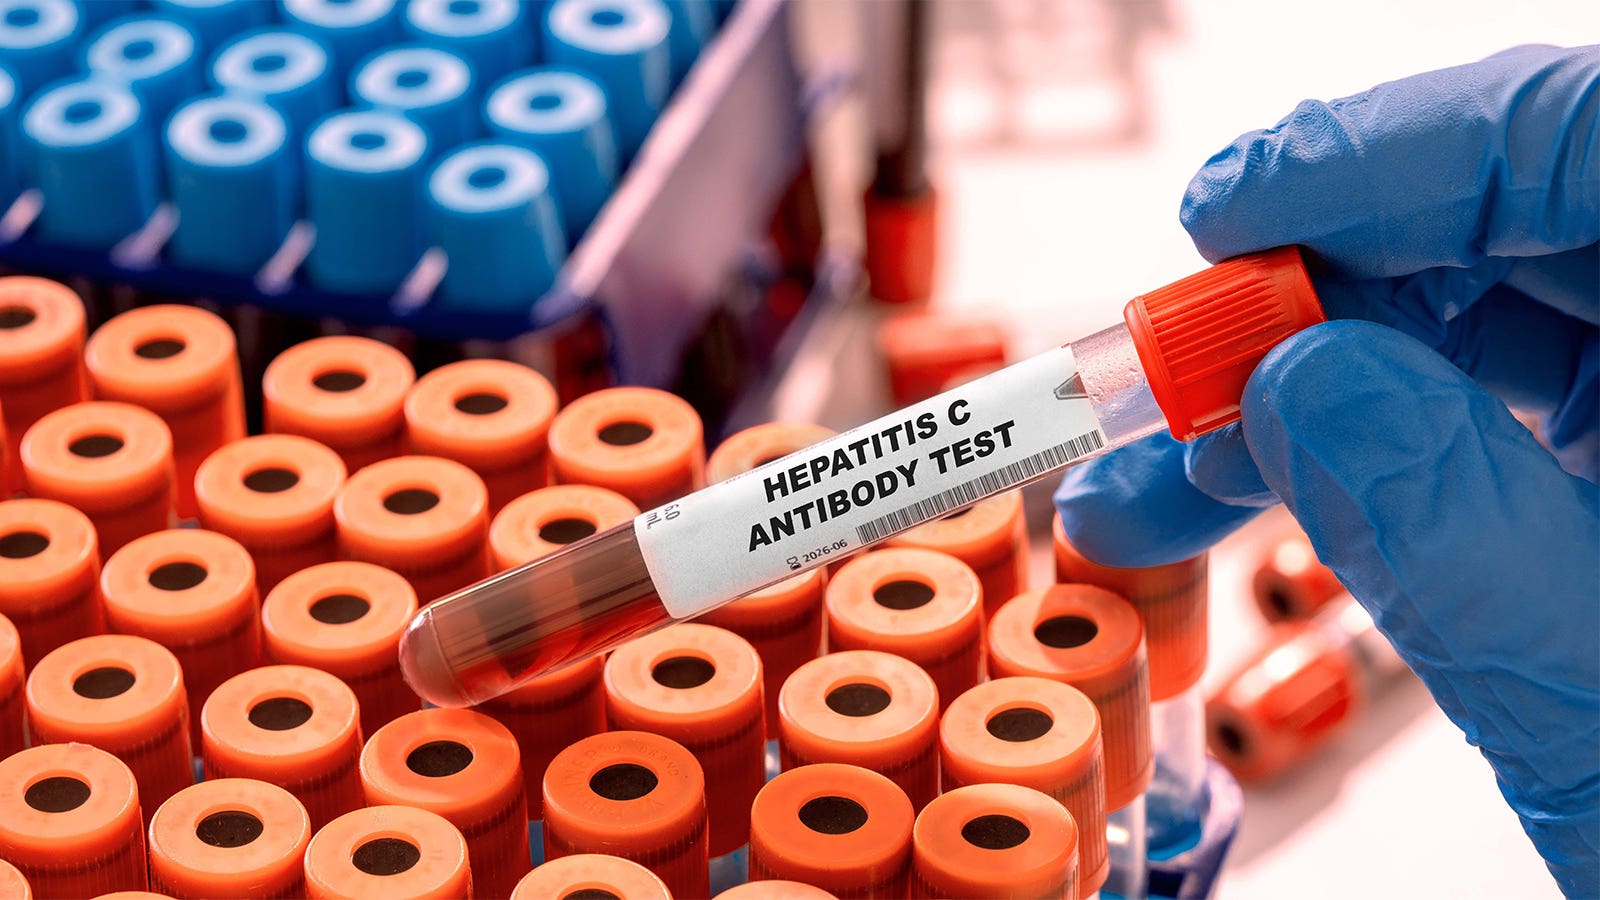 CDC Backs Hepatitis C Screening for Kids Exposed in the Womb